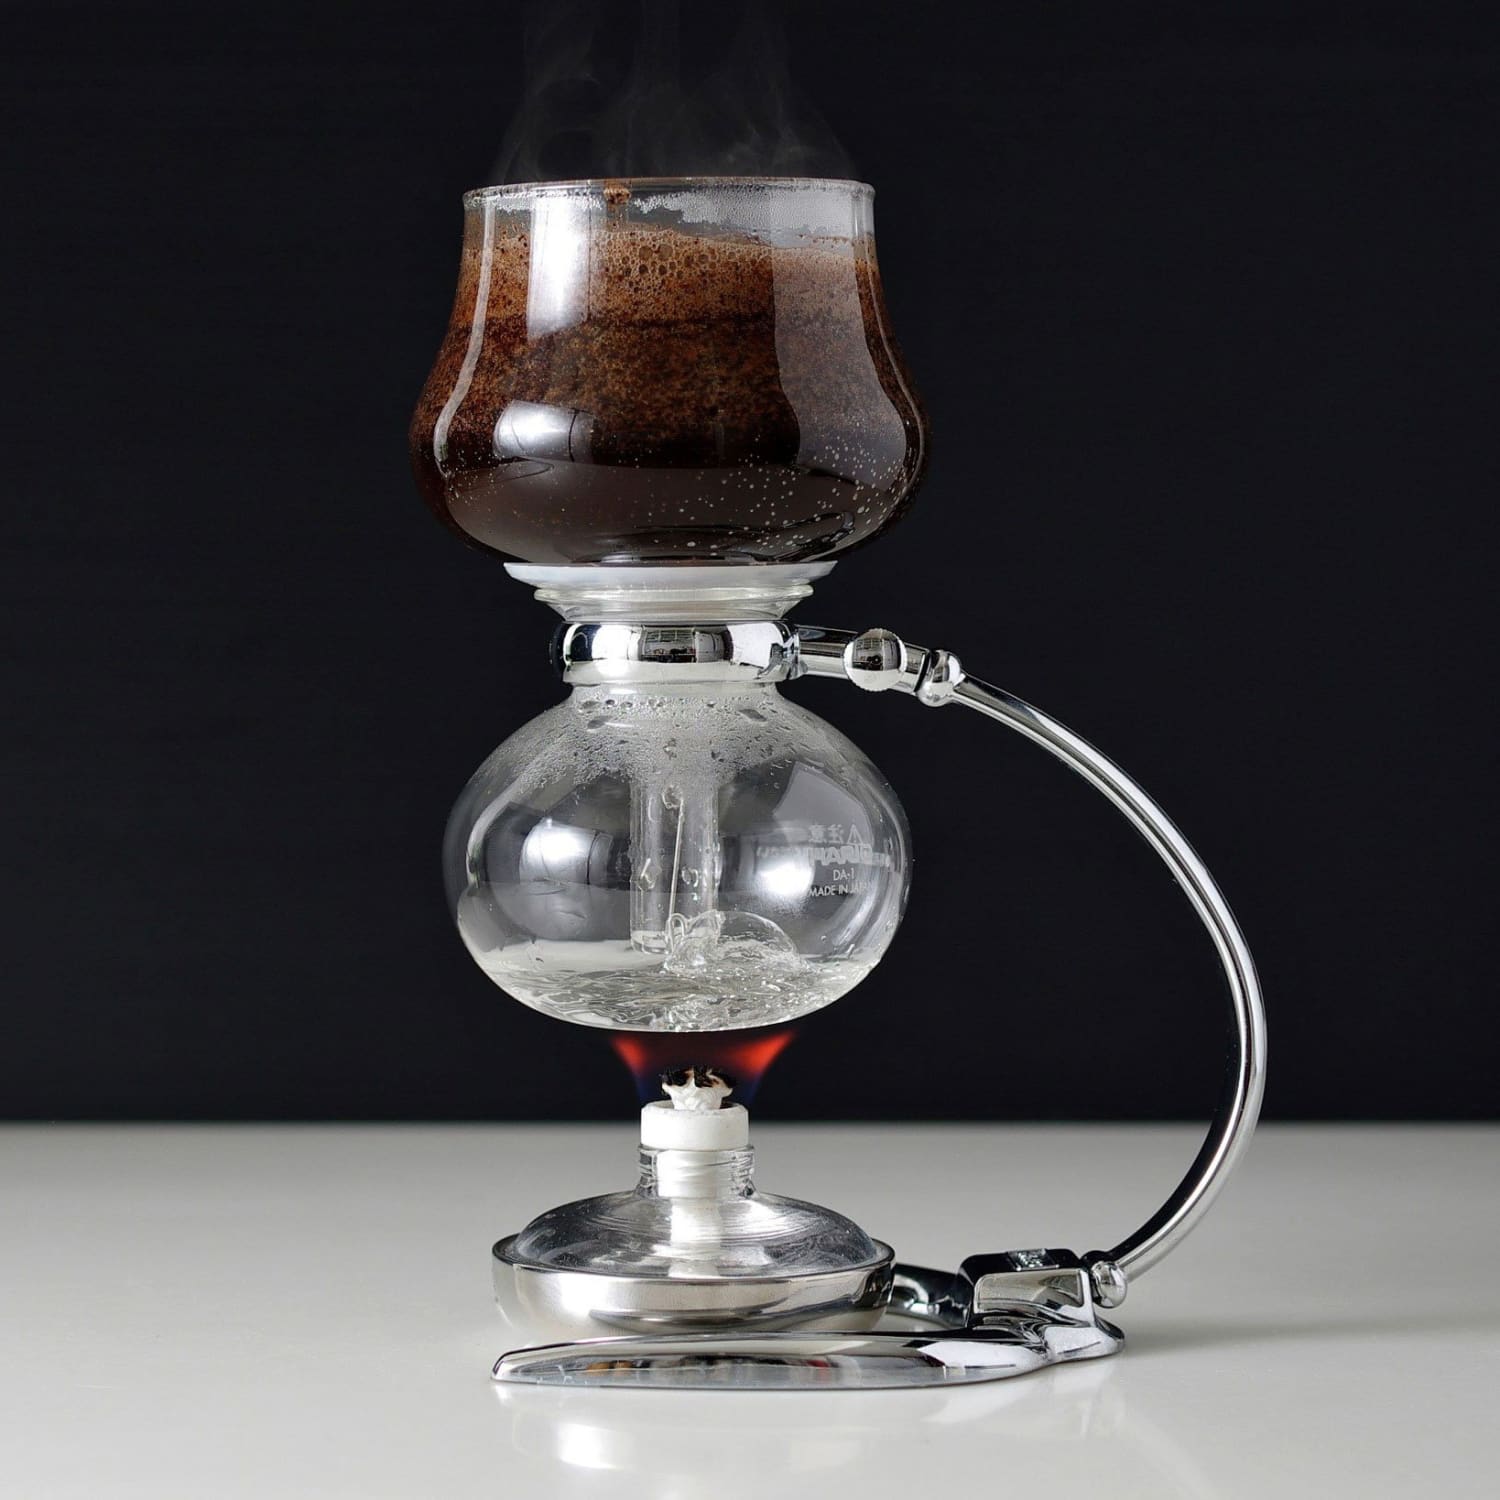 Coffee preparation - Wikipedia